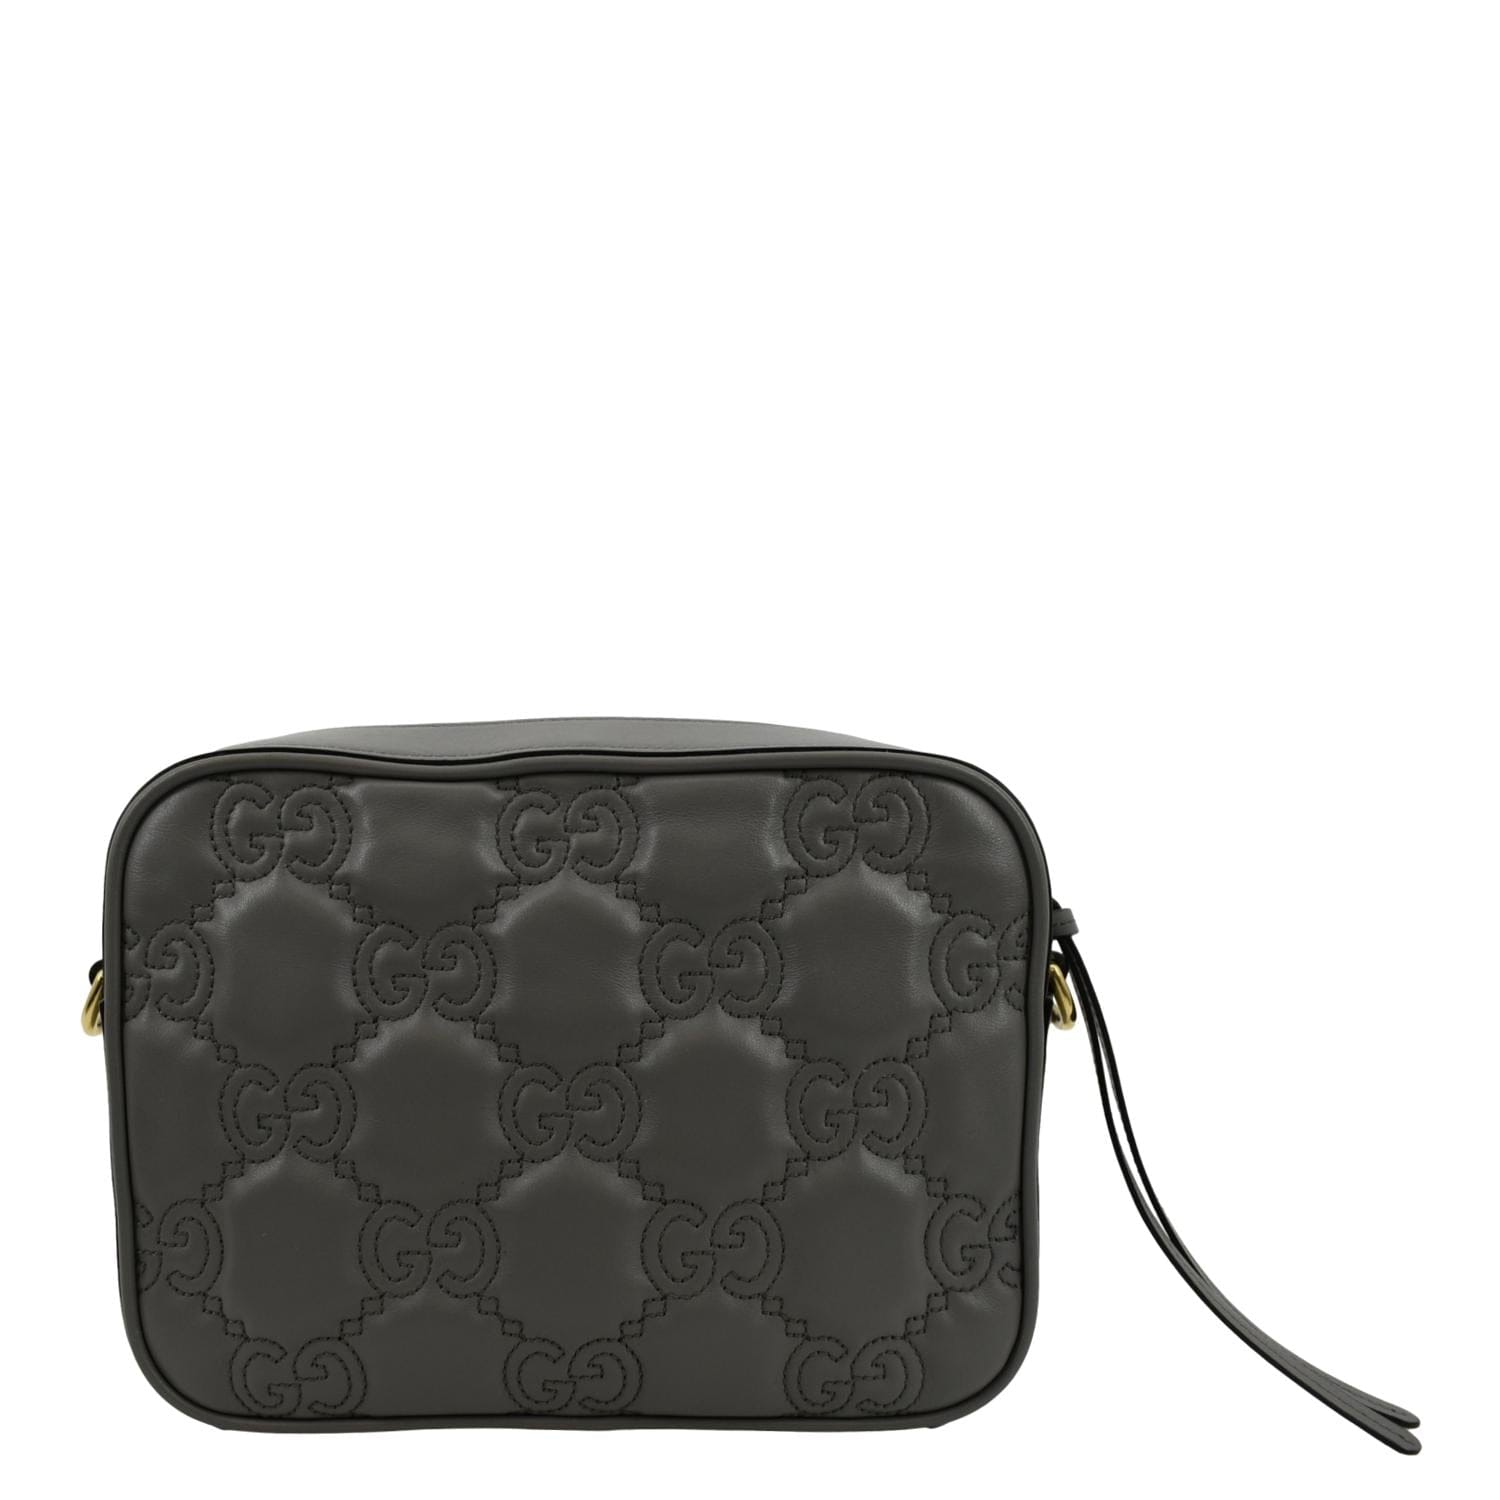 NEW Gucci Marmont GG orange Leather Interlocking Purse Handbag | eBay